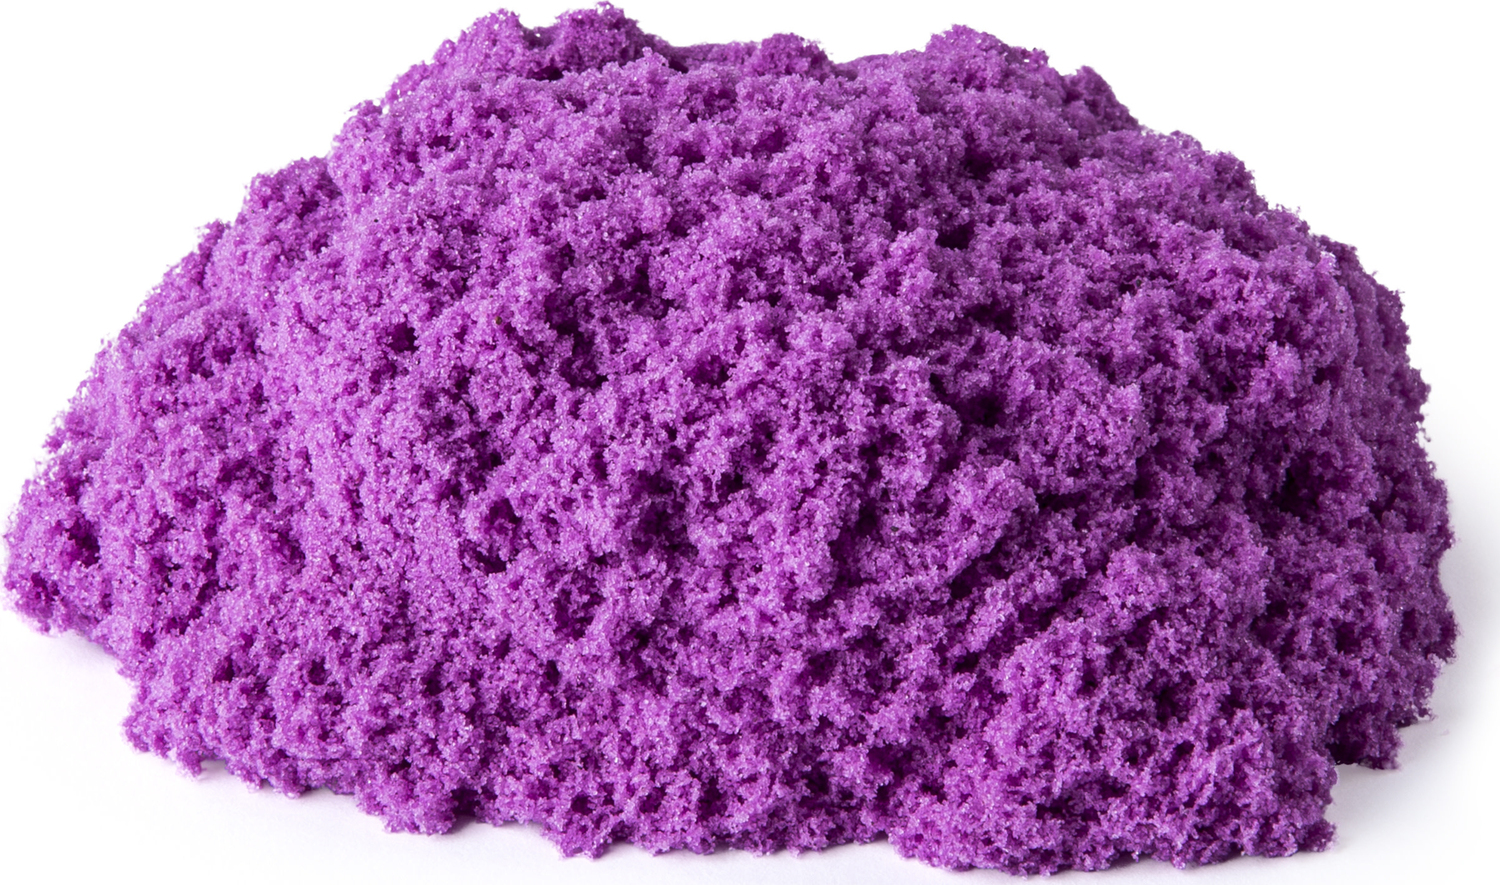 Kinetic Sand The Original Moldable Play Sand, 2 Lb Purple Violet